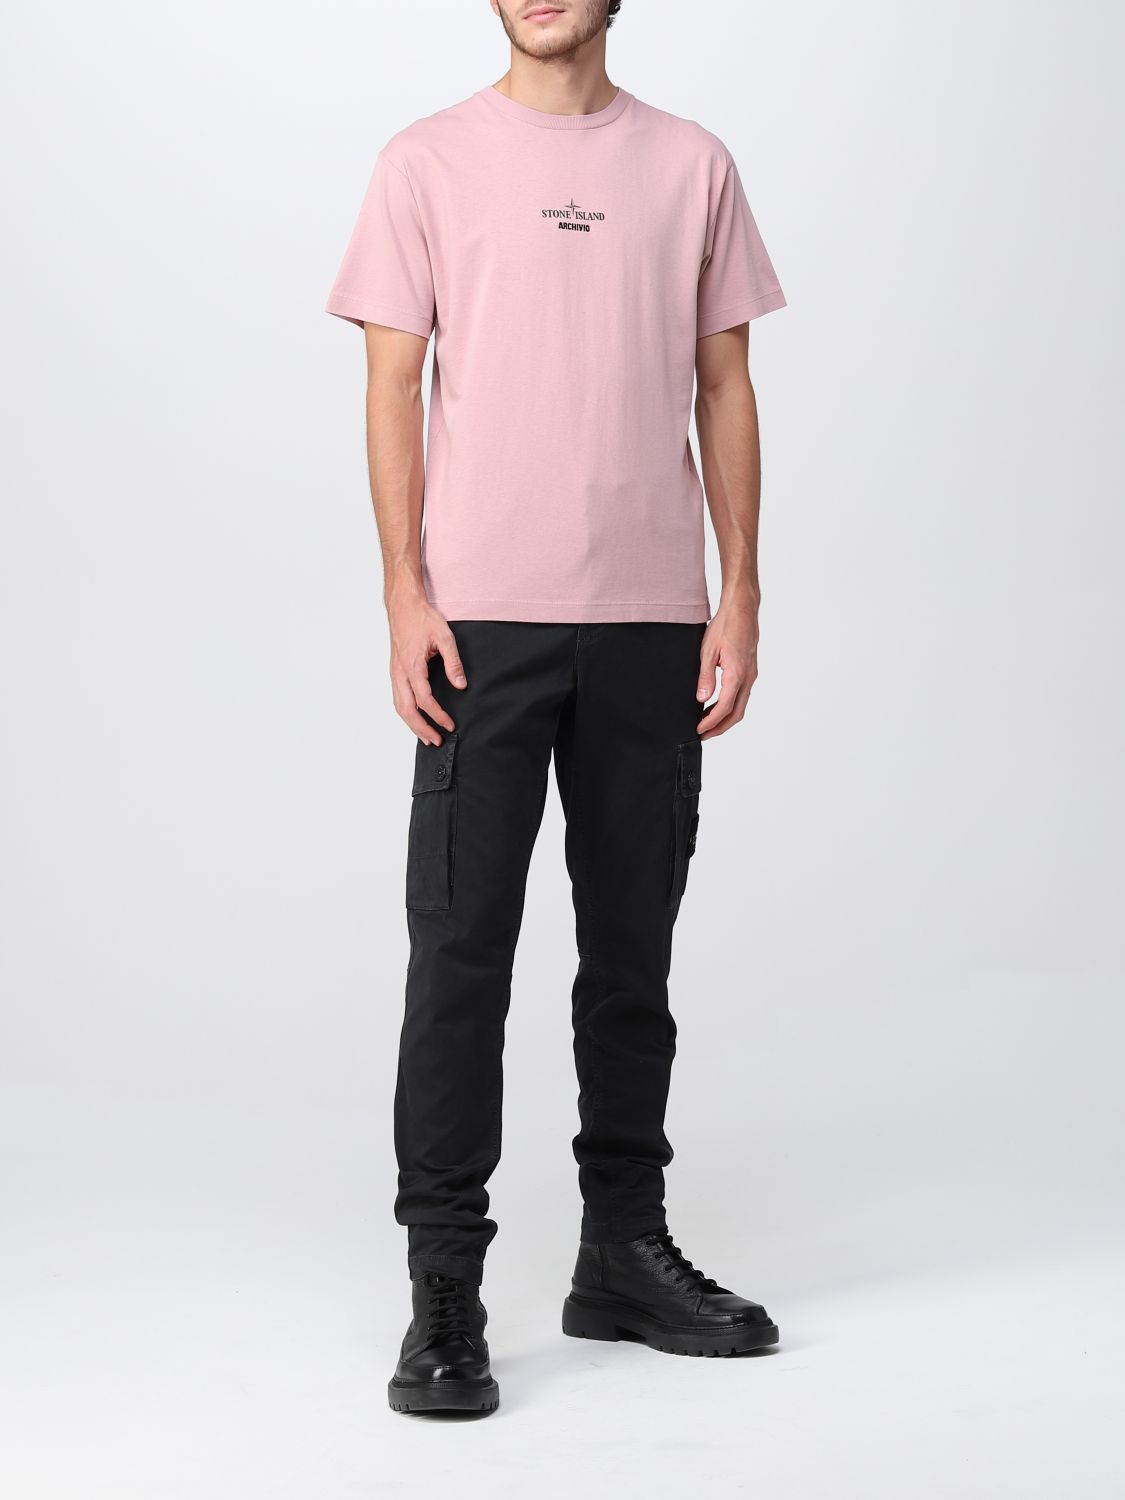 T-shirt Stone Island: Stone Island t-shirt for man pink 2